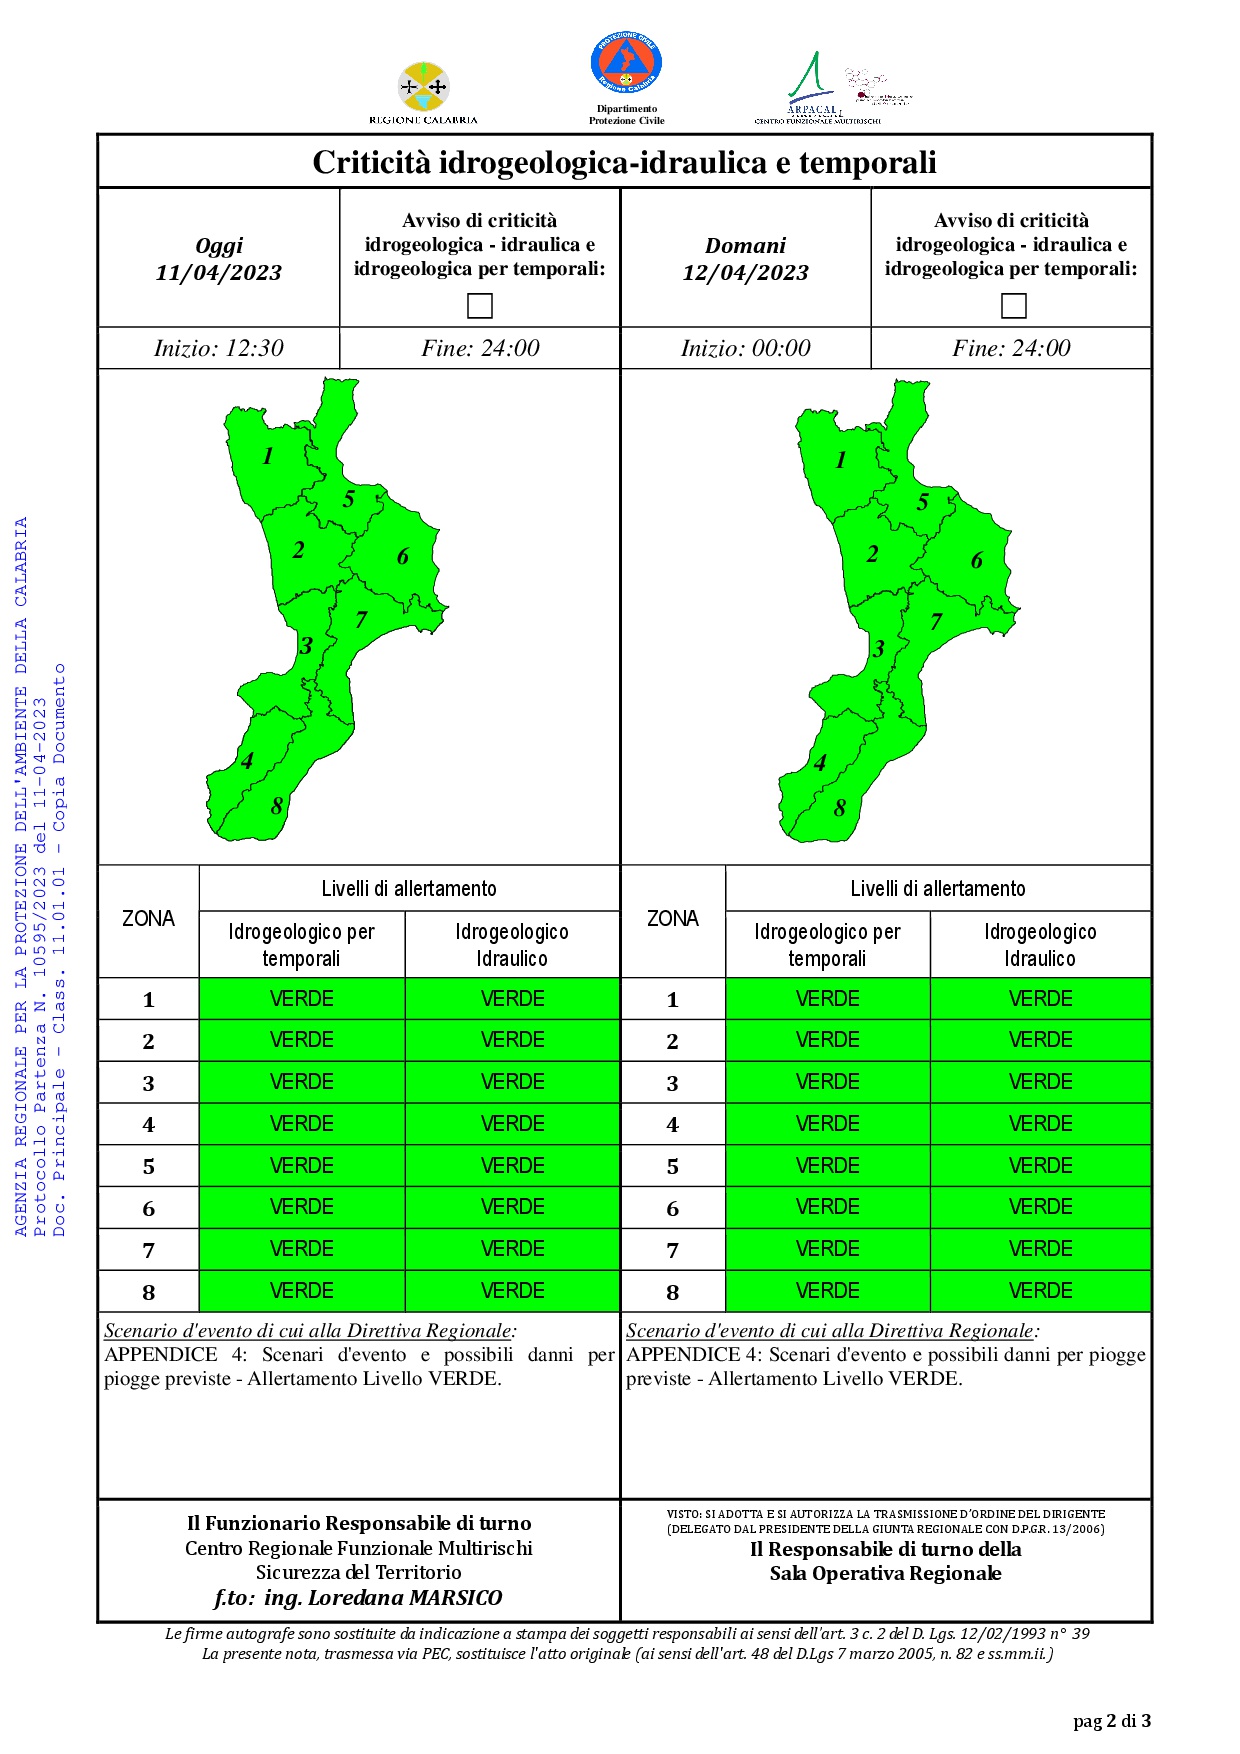 Criticità idrogeologica-idraulica e temporali in Calabria 11-04-2023